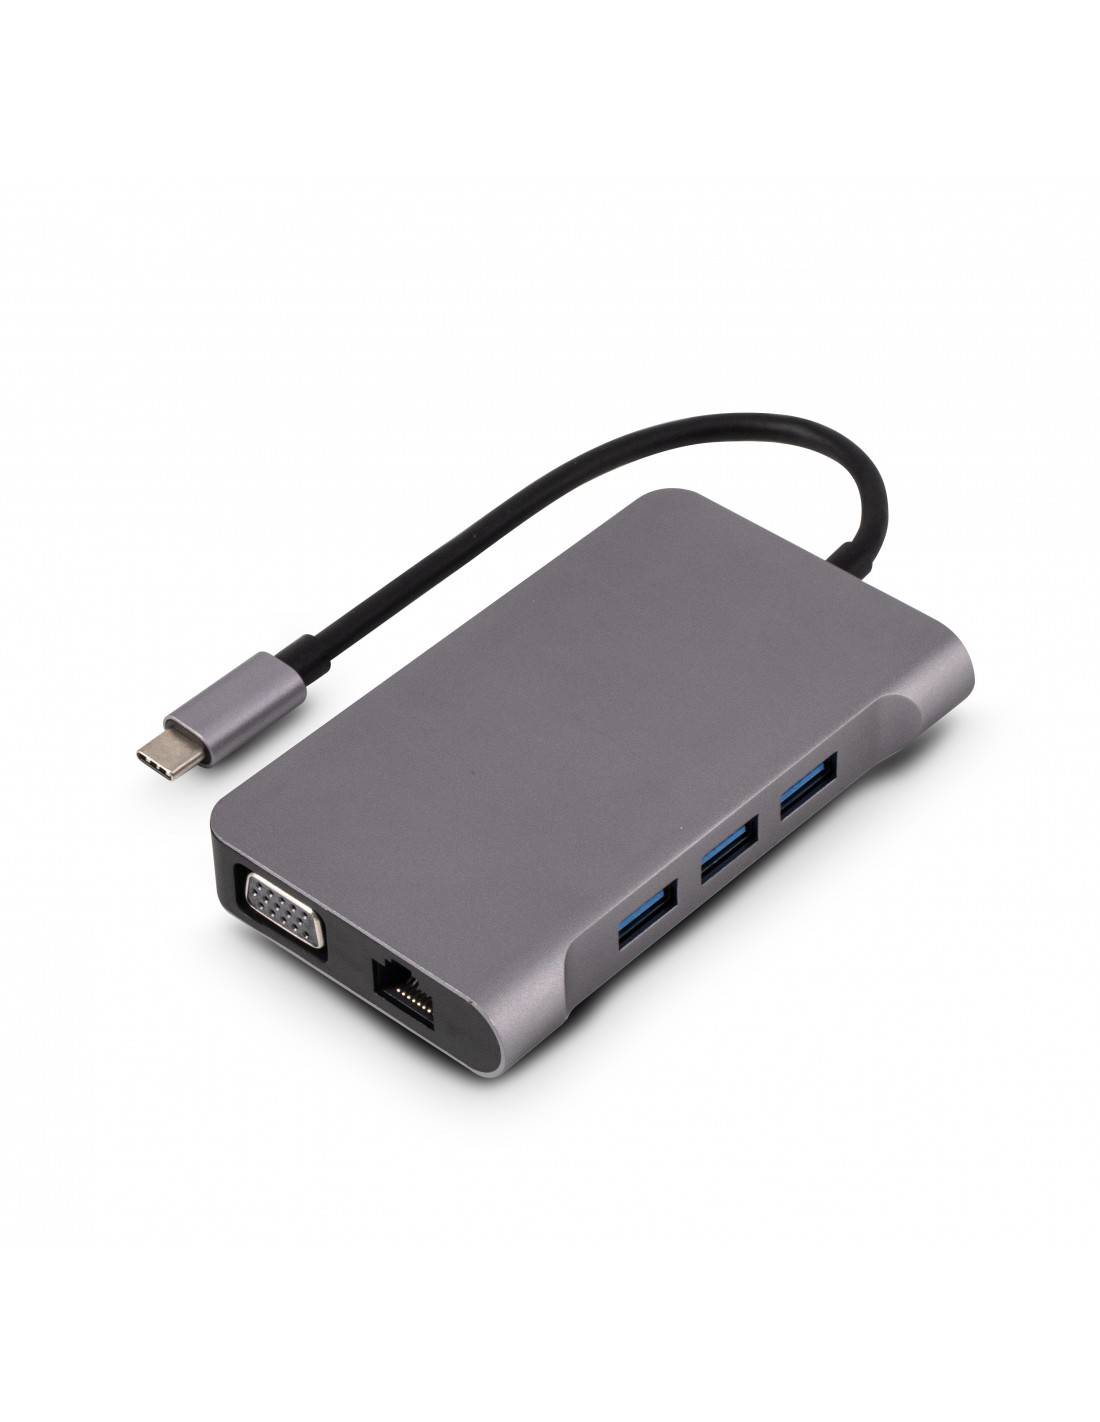 Rca Informatique - image du produit : TYPE-C STATION TRAVEL 3X USB-A 3.1 VGA/HDMI 4K SIDEREAL GRAY